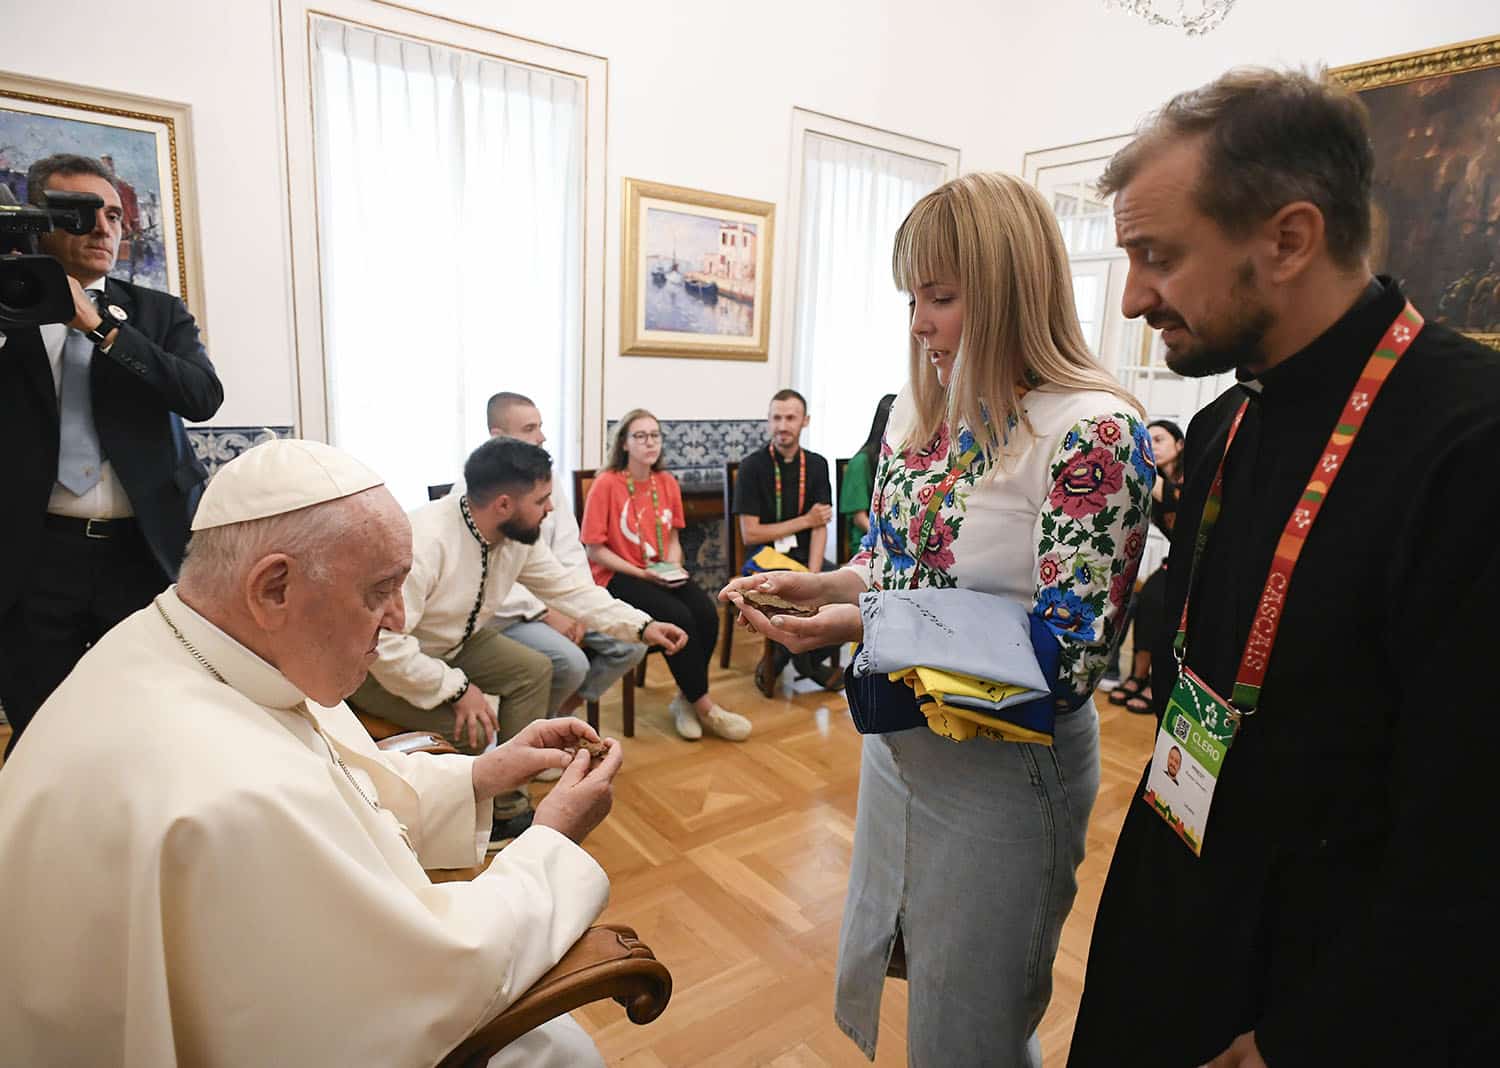 POPE UKRAINIAN PILGRIMS